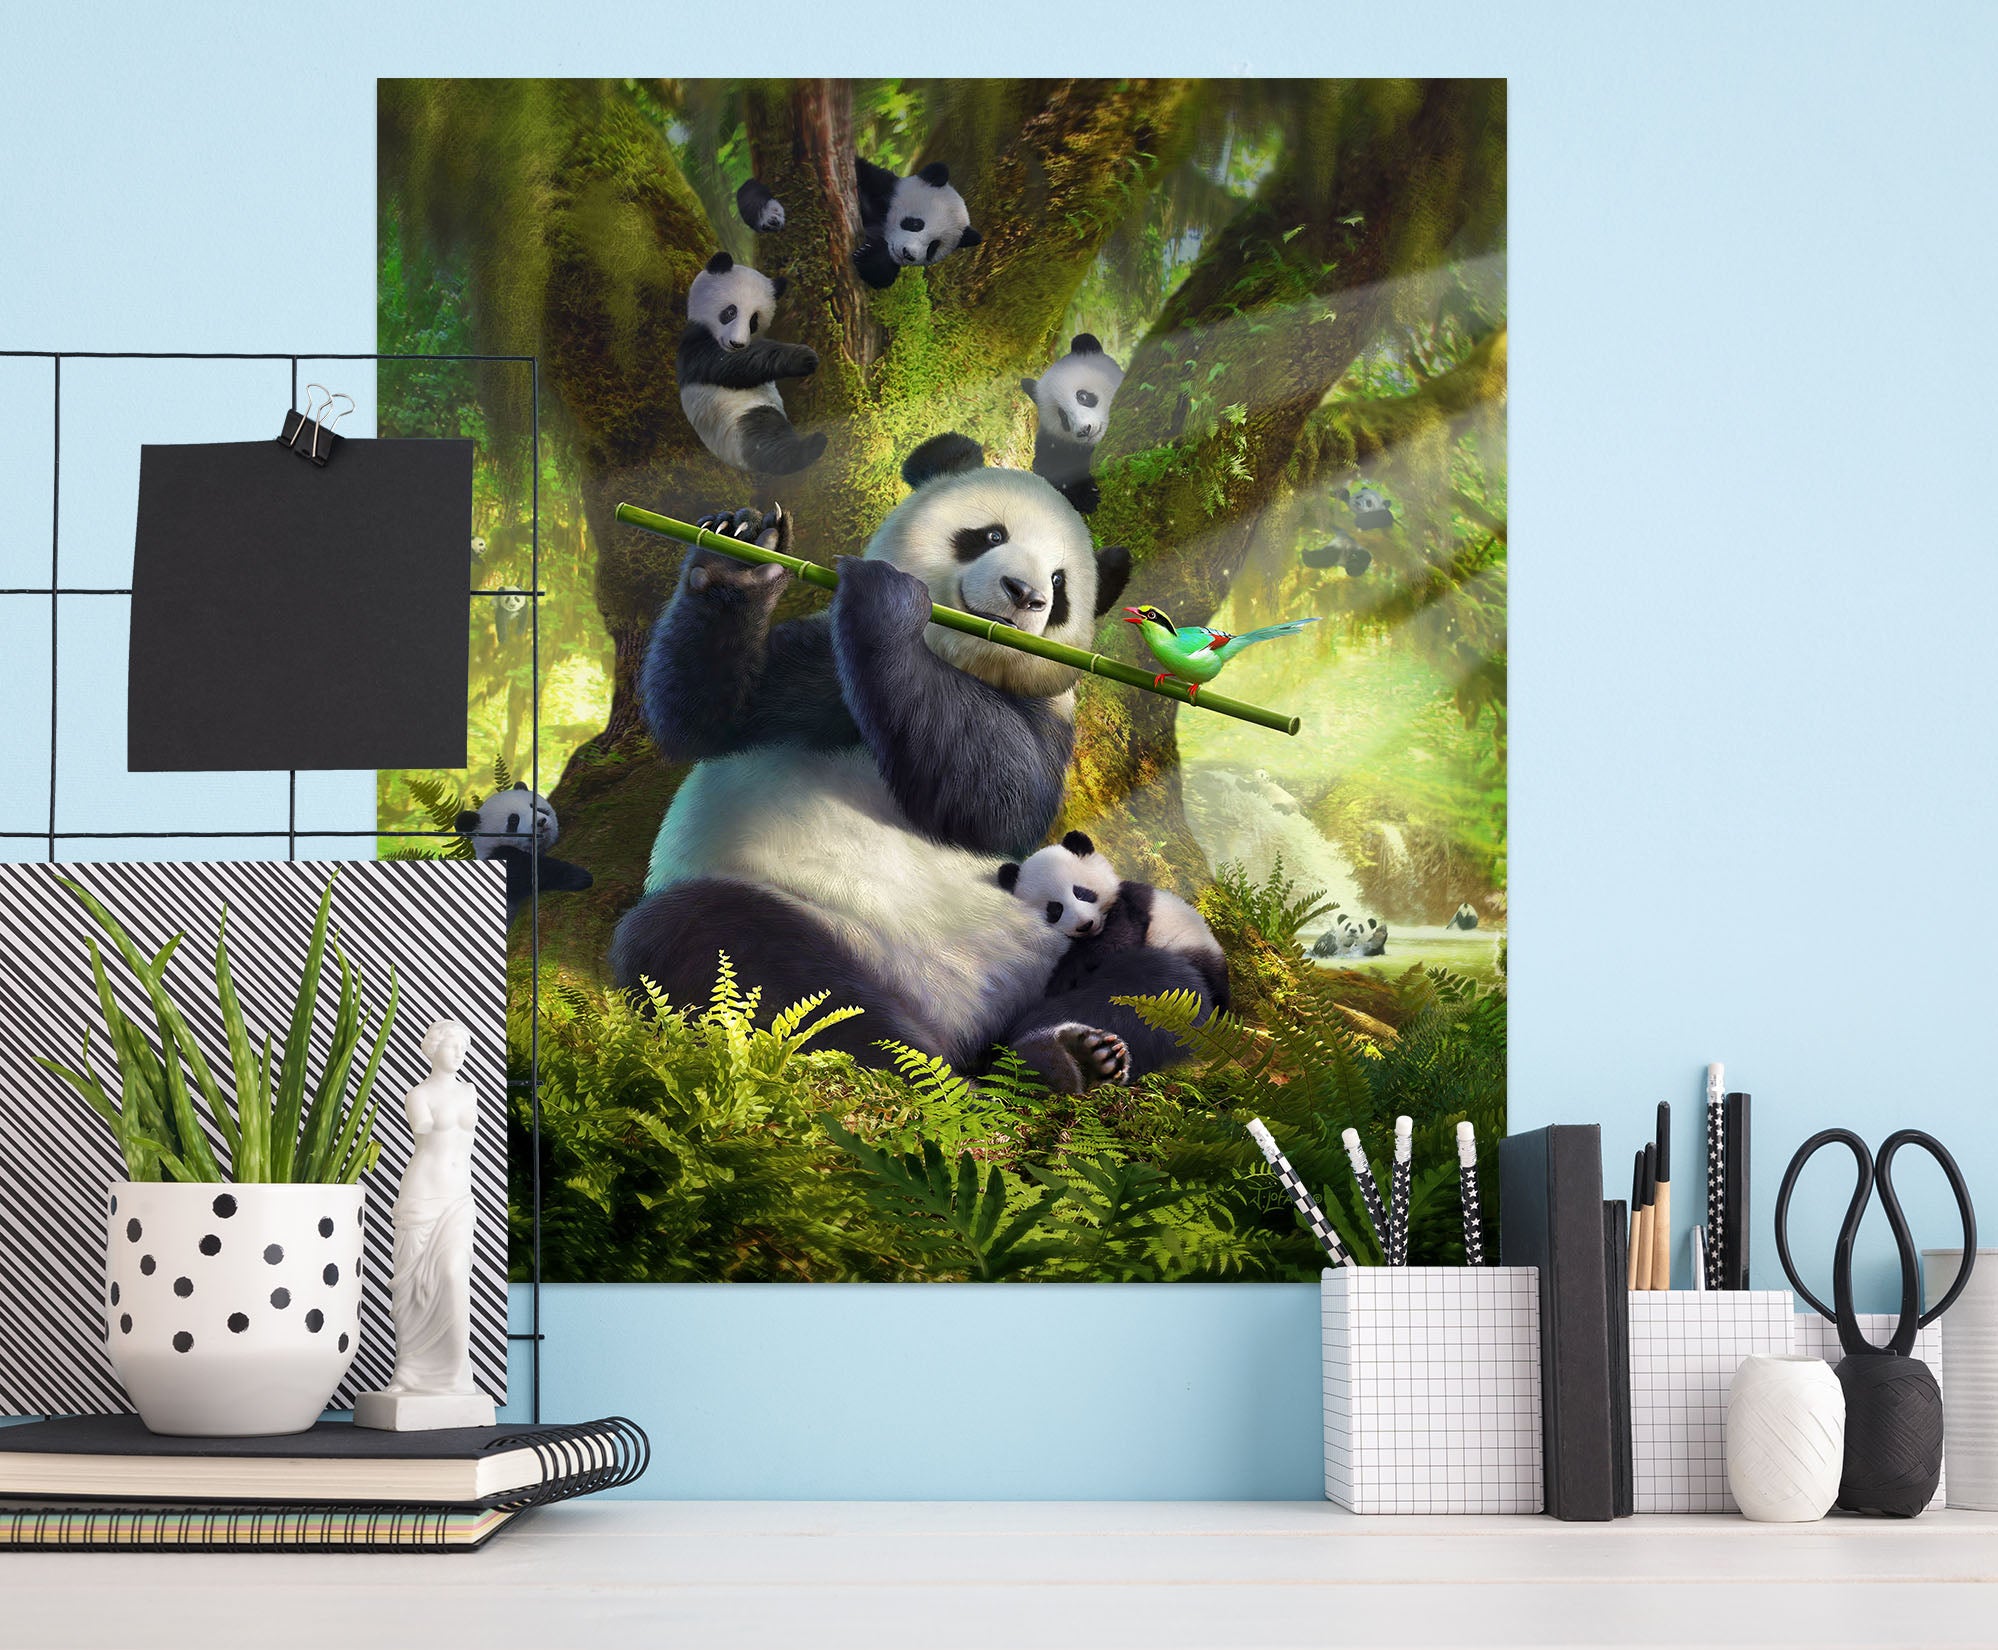 3D Panda Bear 018 Jerry LoFaro Wall Sticker